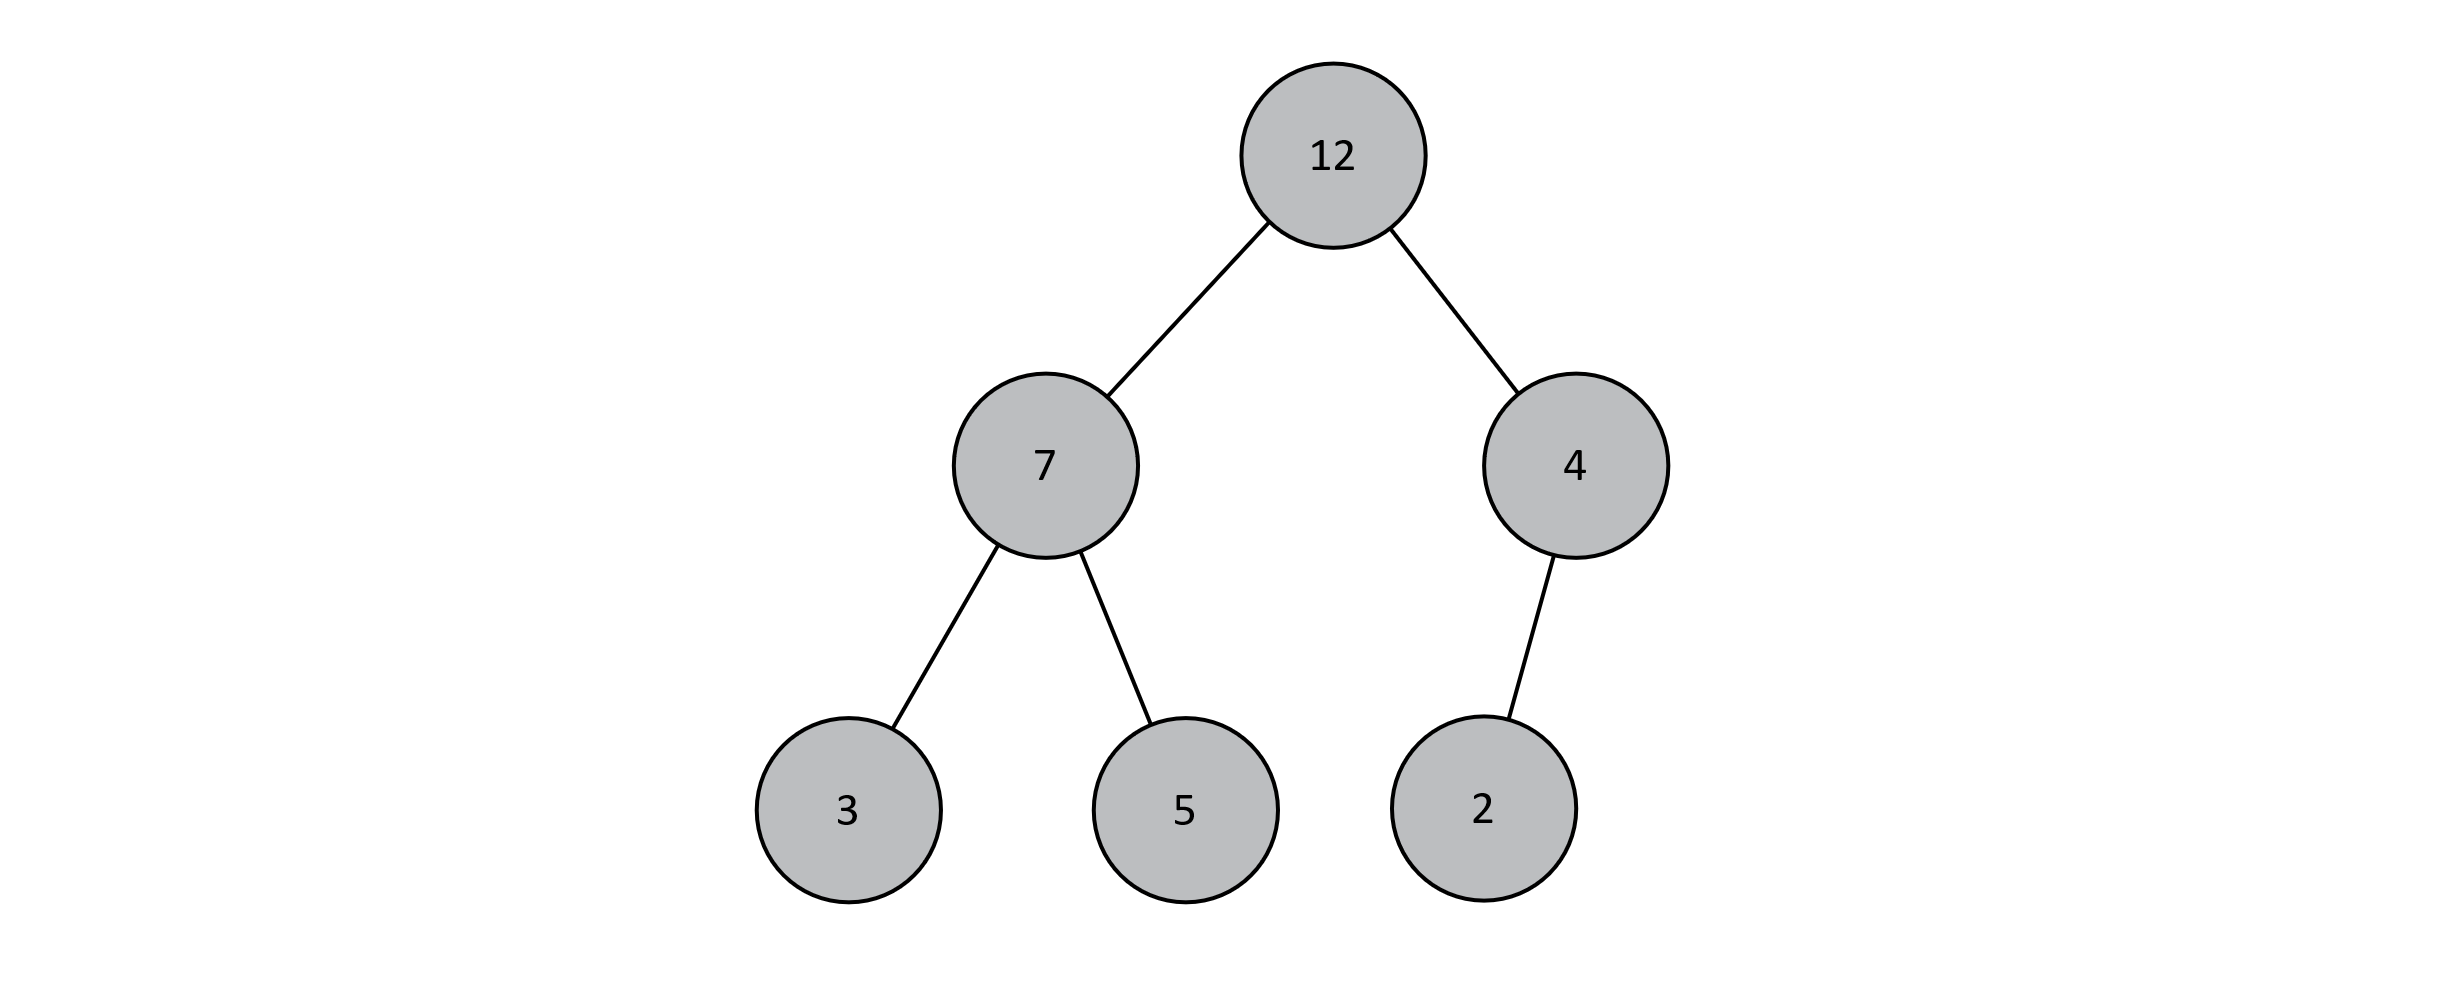 An example binary heap presented as a tree.